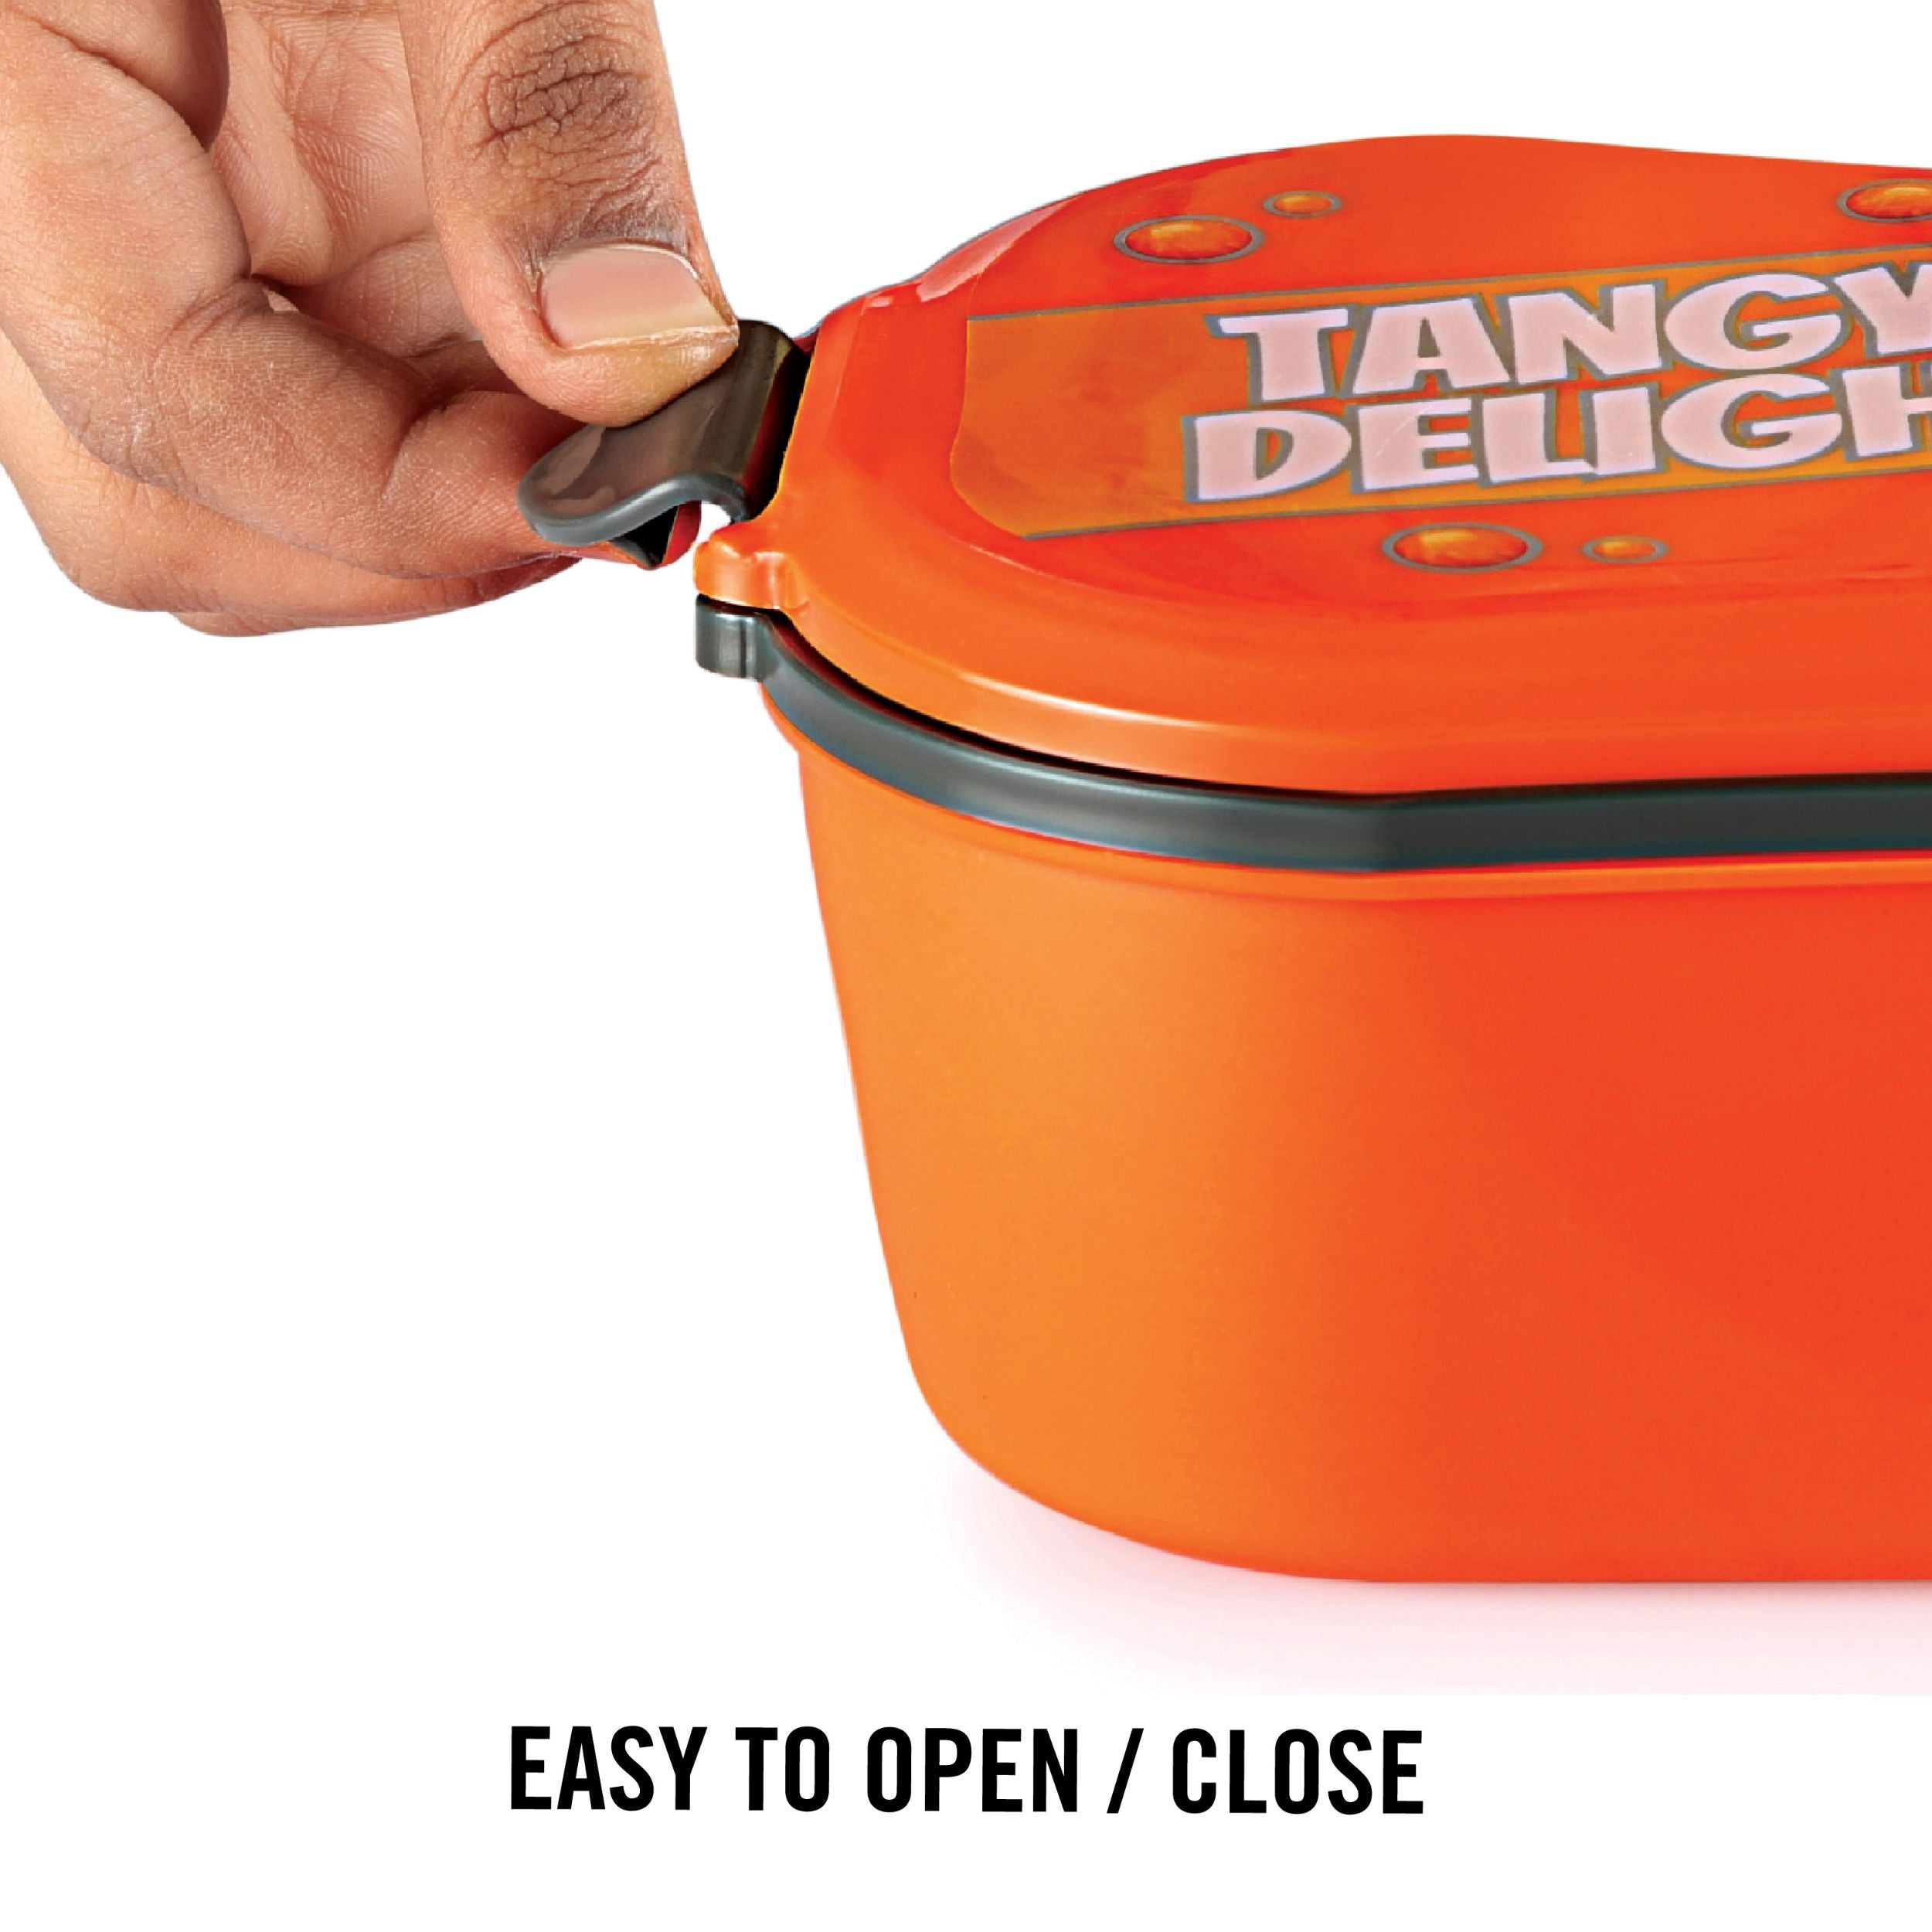 Doppler Insulated Lunch Box Orange